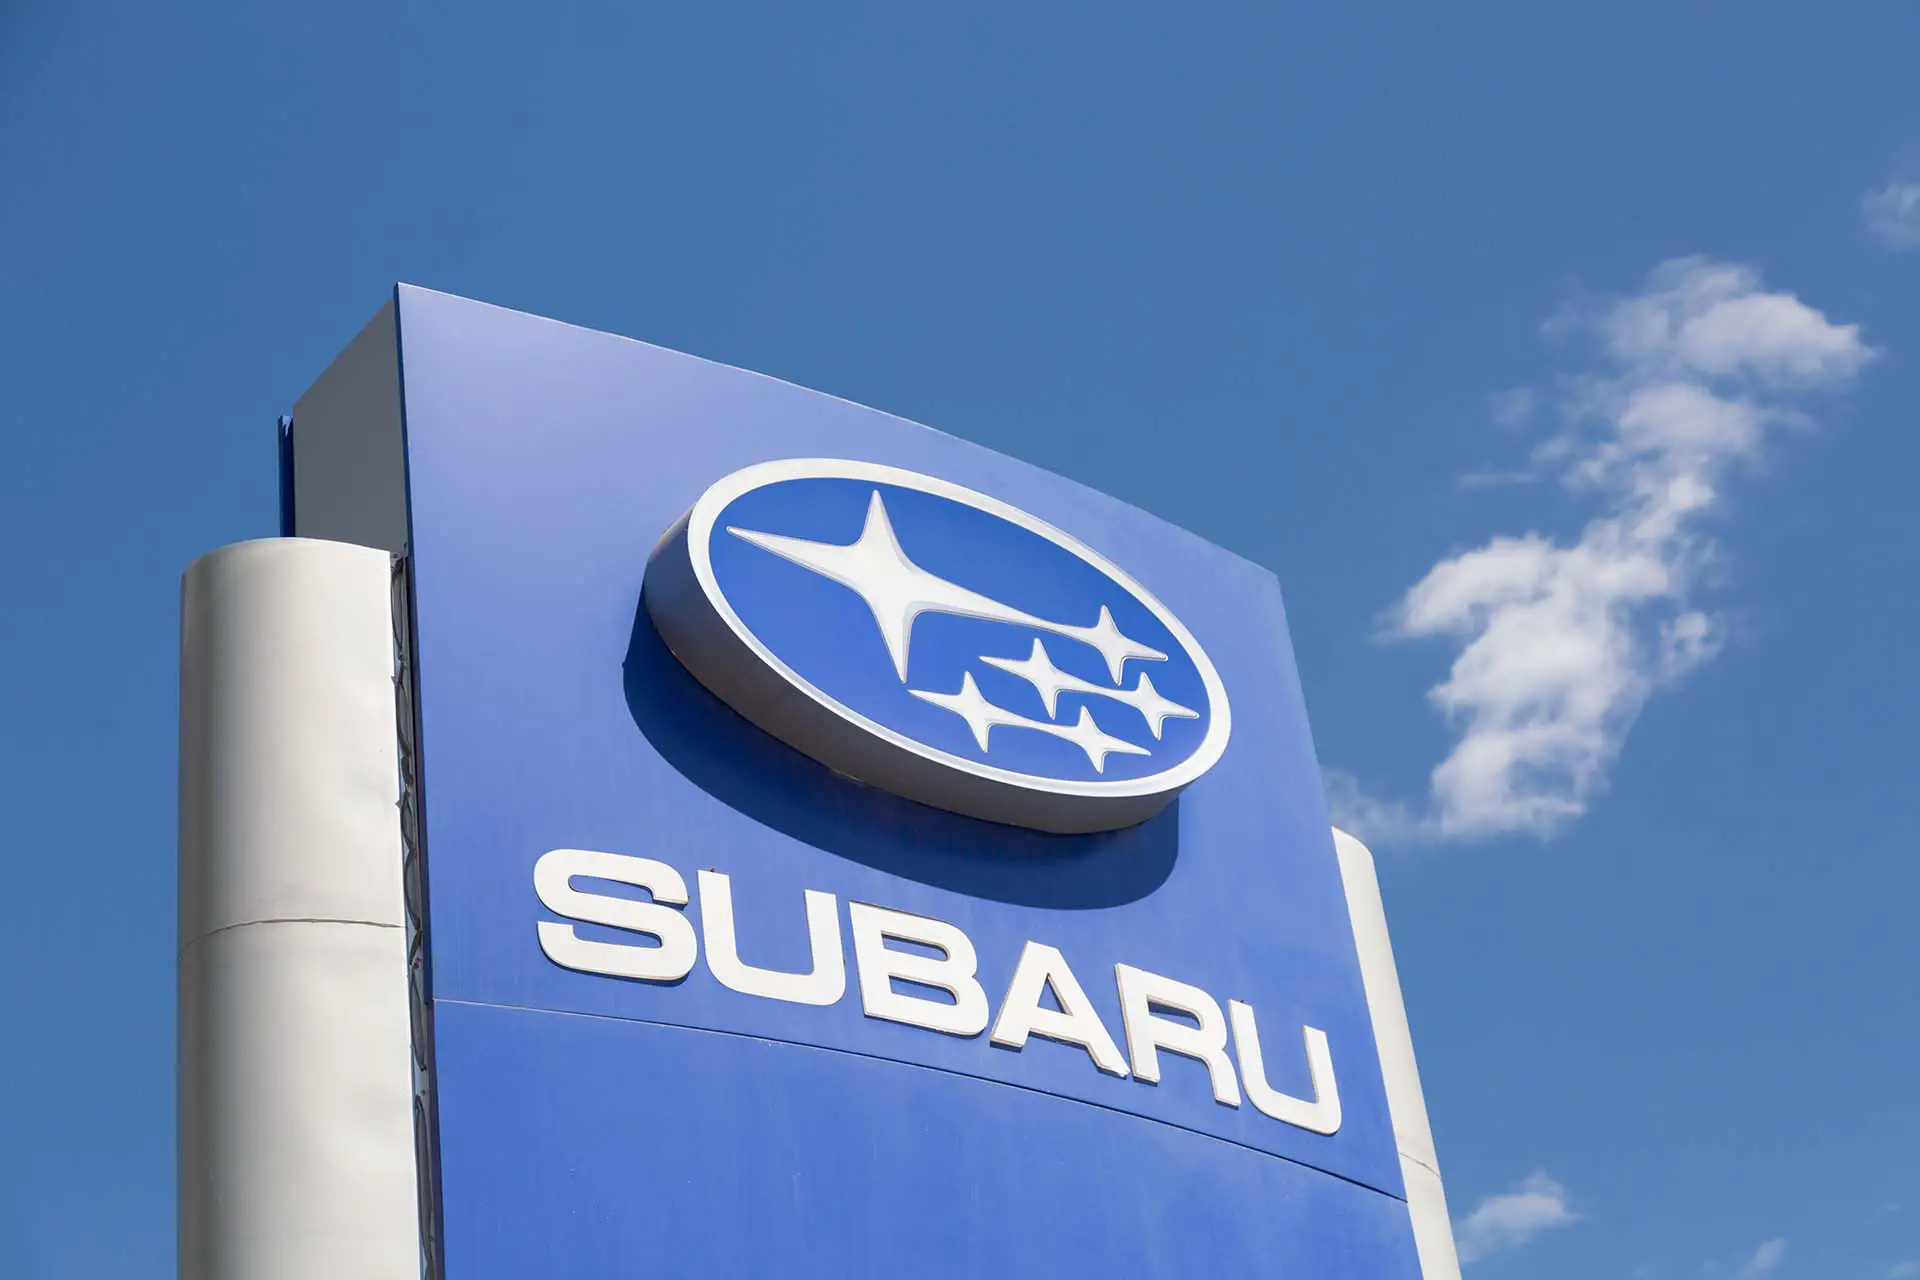 Subaru automobile dealership Sign against blue sky. Subaru is a japanese manufacturer of automobiles